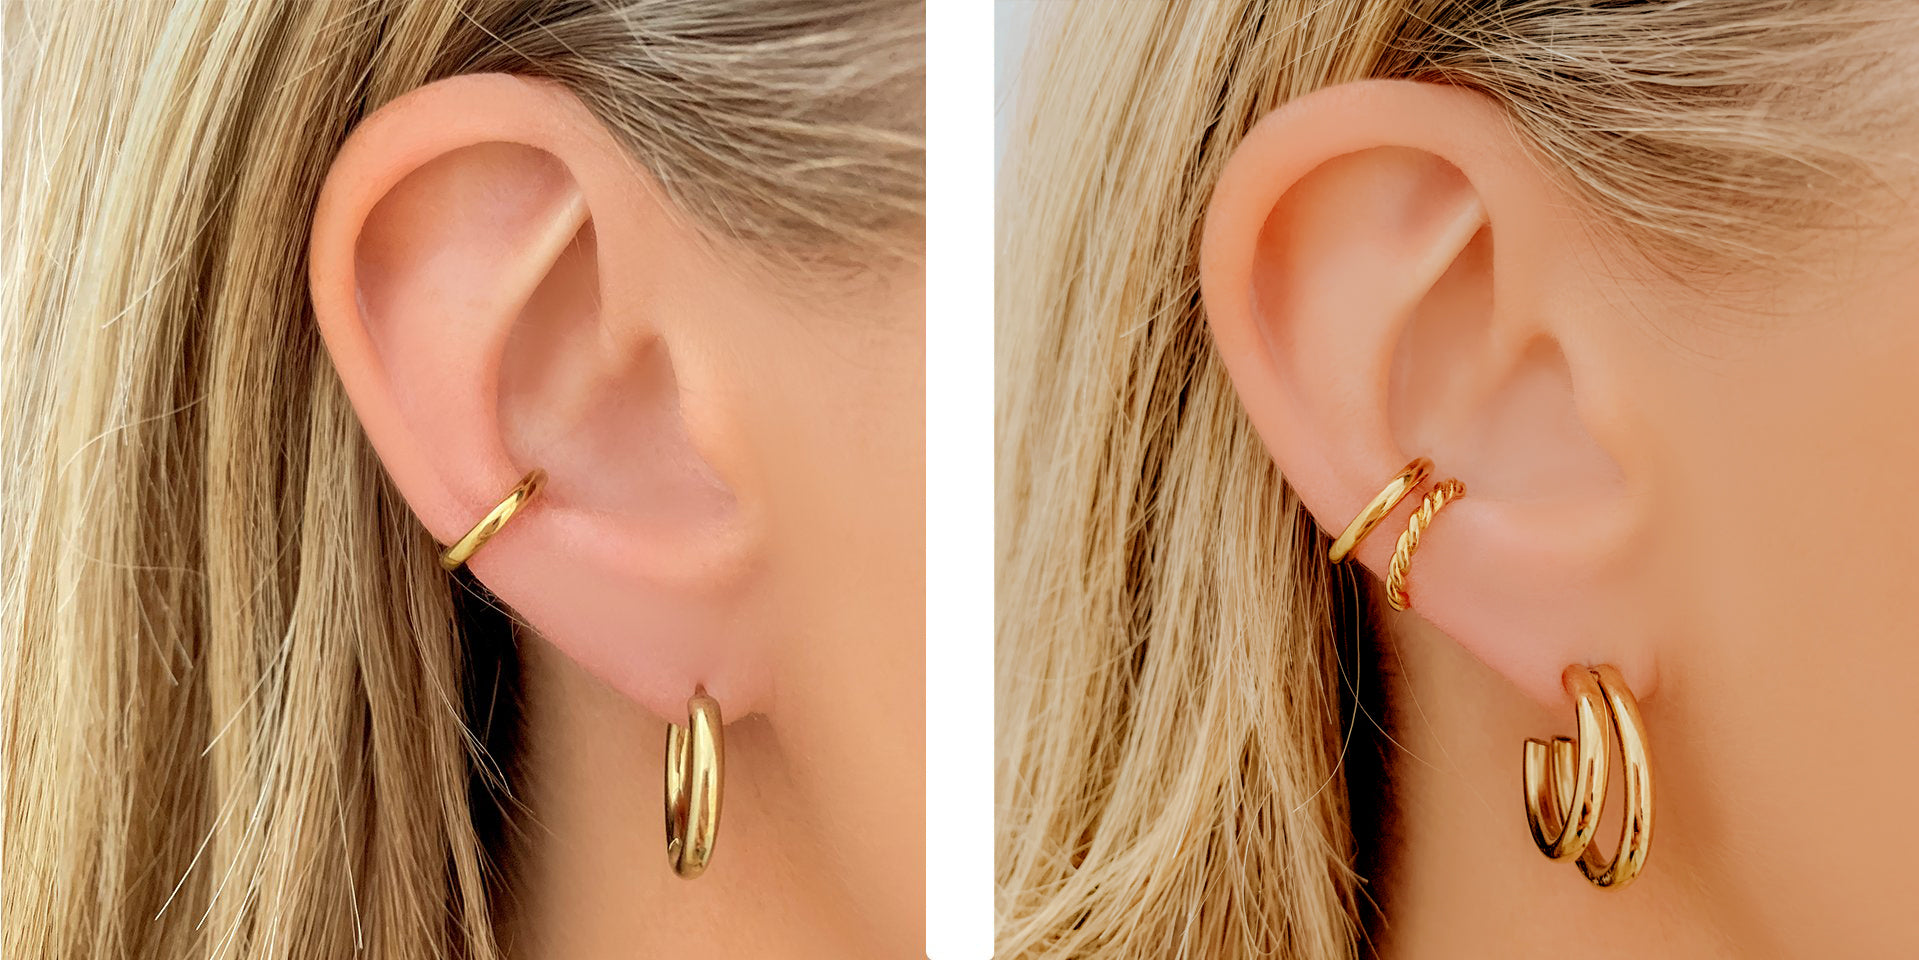 Sugar Blossom earrings on one piercing